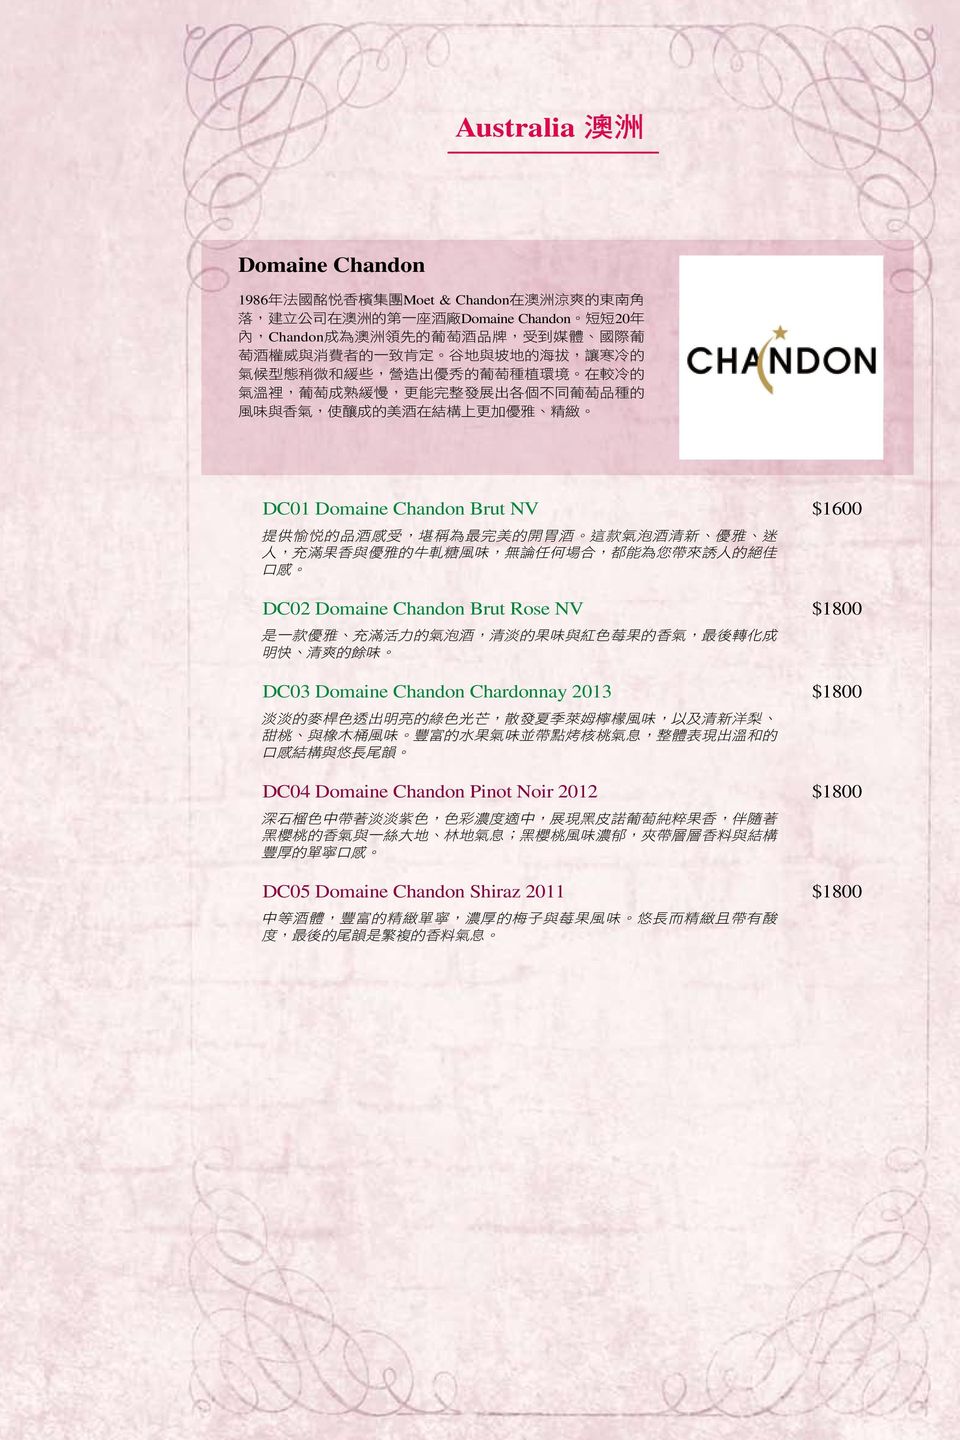 Brut Rose NV $1800 DC03 Domaine Chandon Chardonnay 2013 $1800 DC04